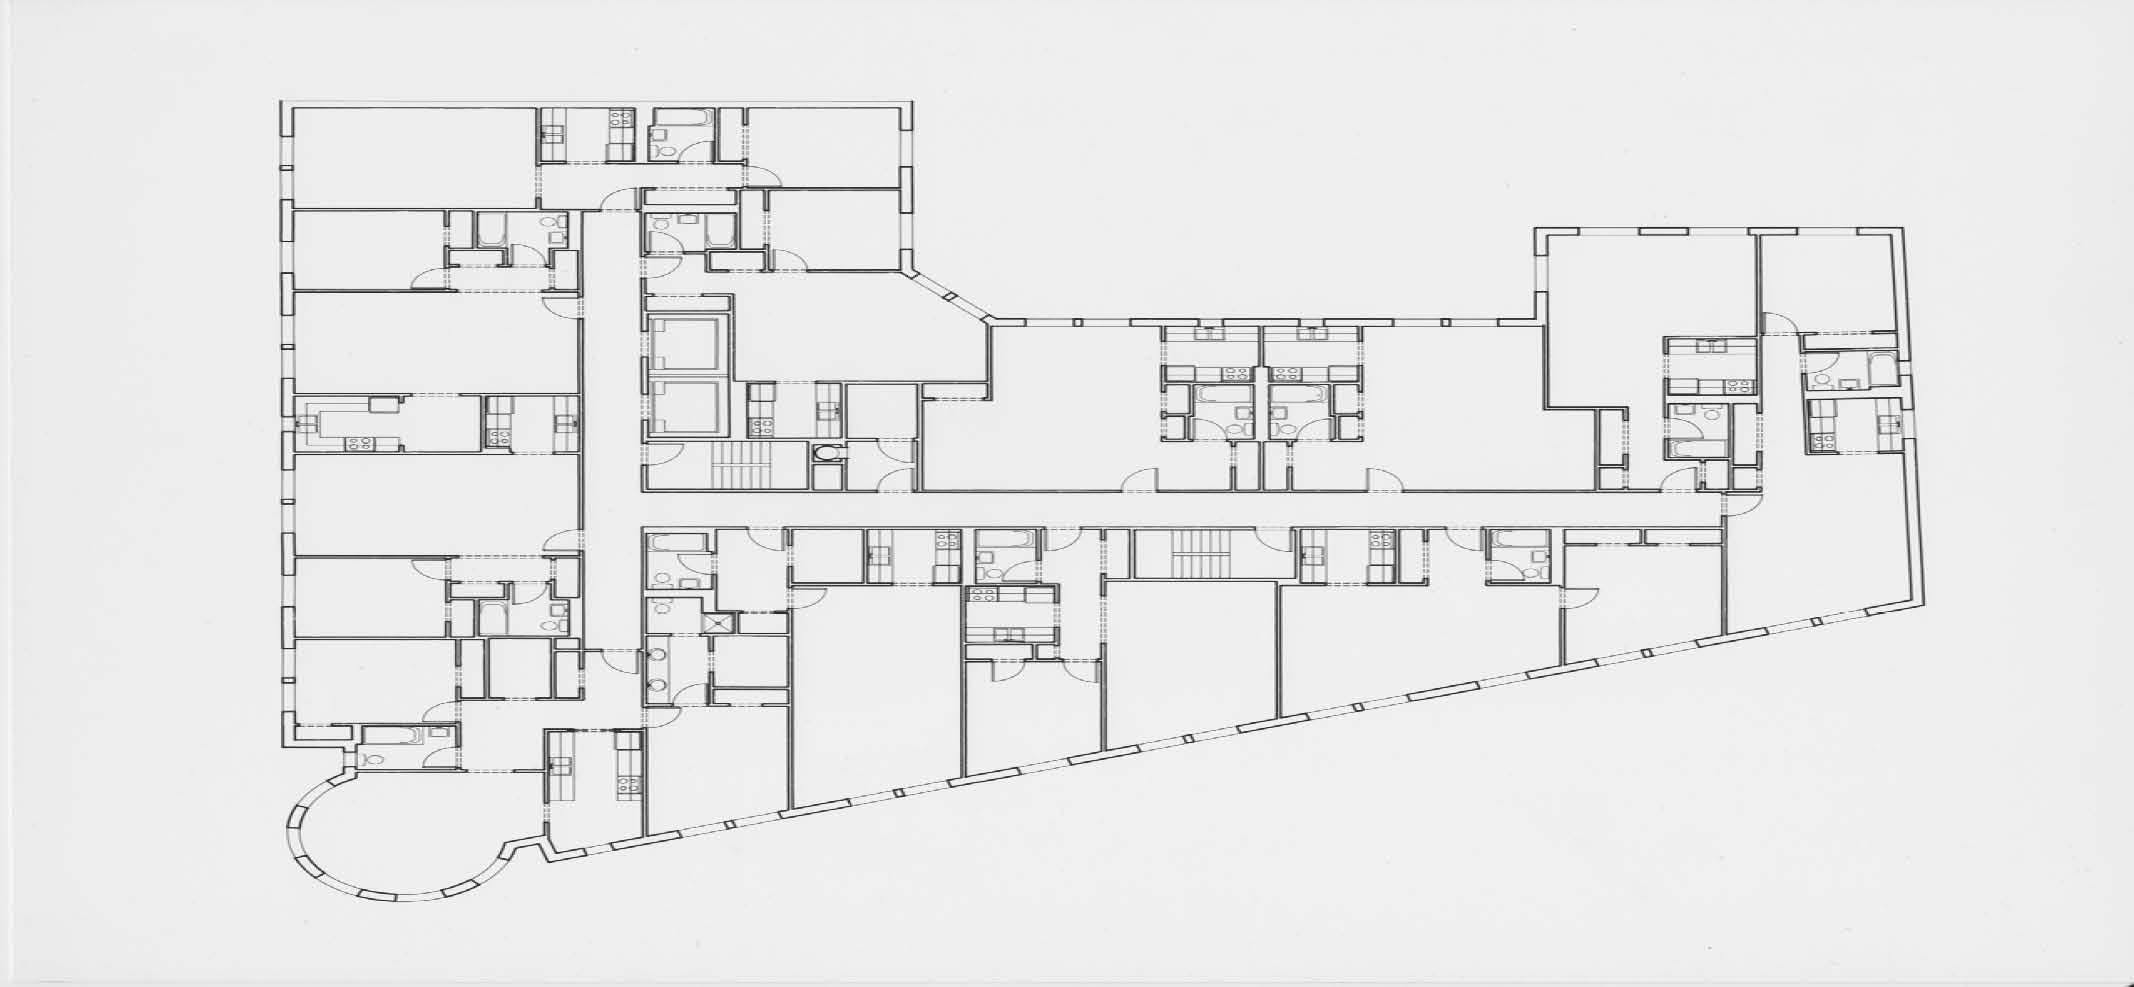 103 unit mixed use apartment building/landmarked house